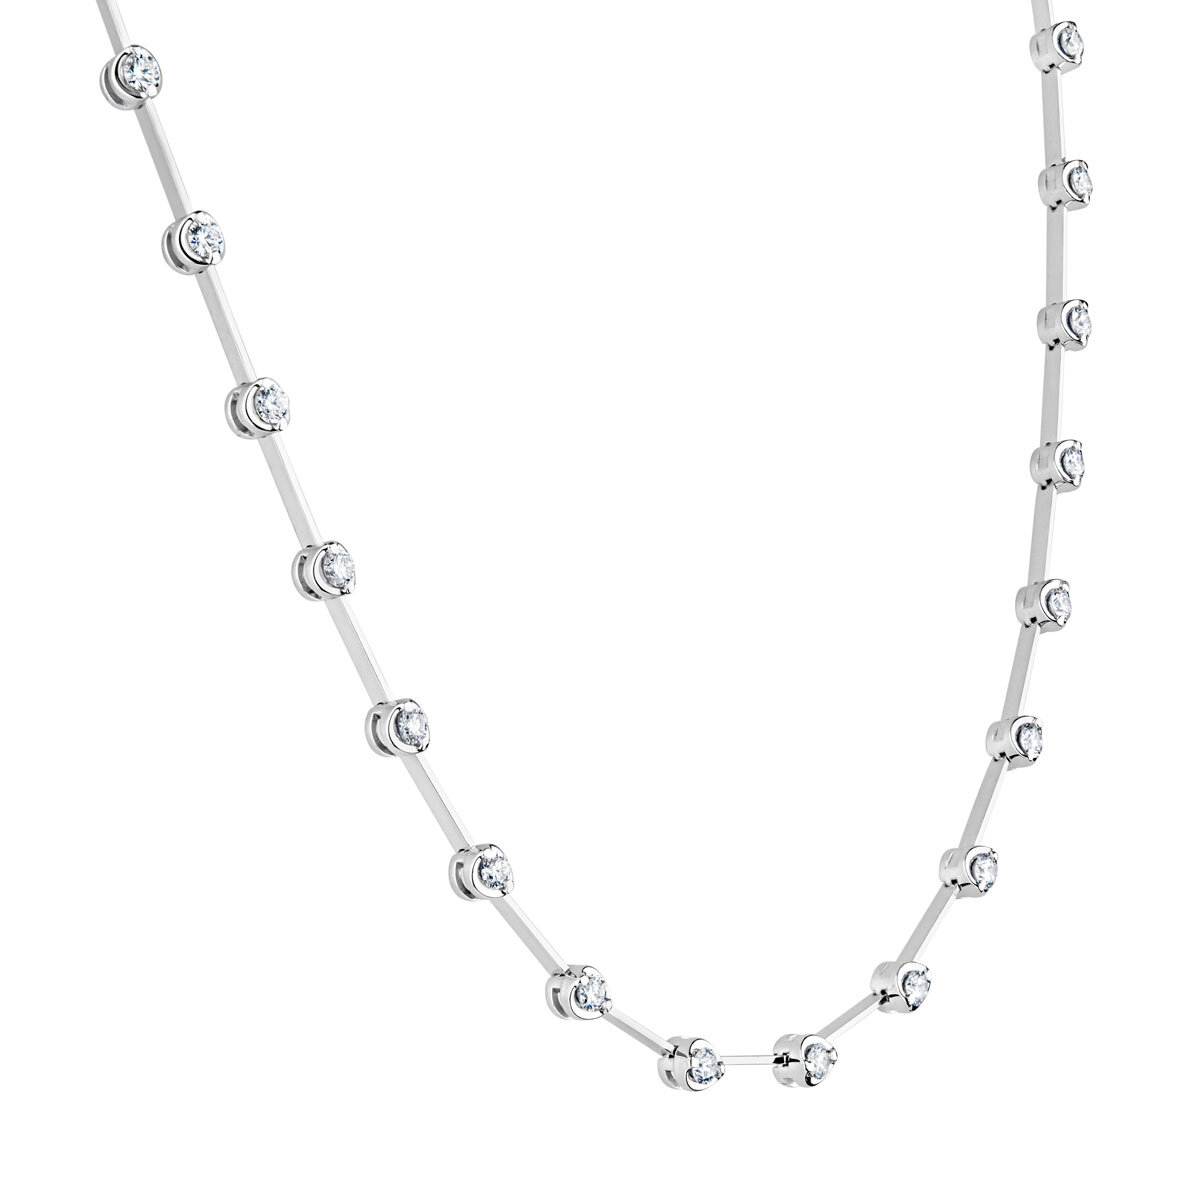 1.25ctw Round Brilliant Cut Diamond Necklace, 18ct WHite Gold